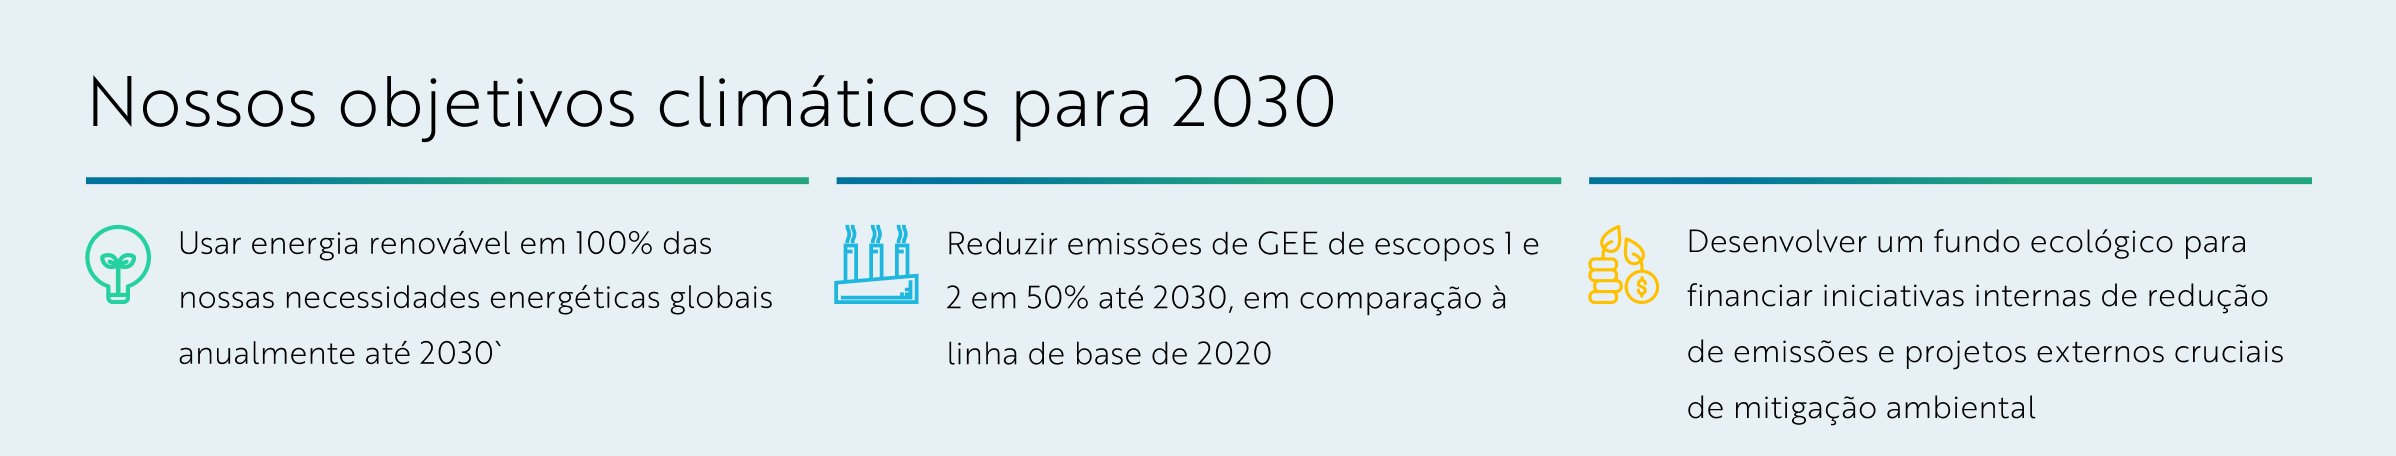 PT Translation Our 2030 Climate Goals Graphics